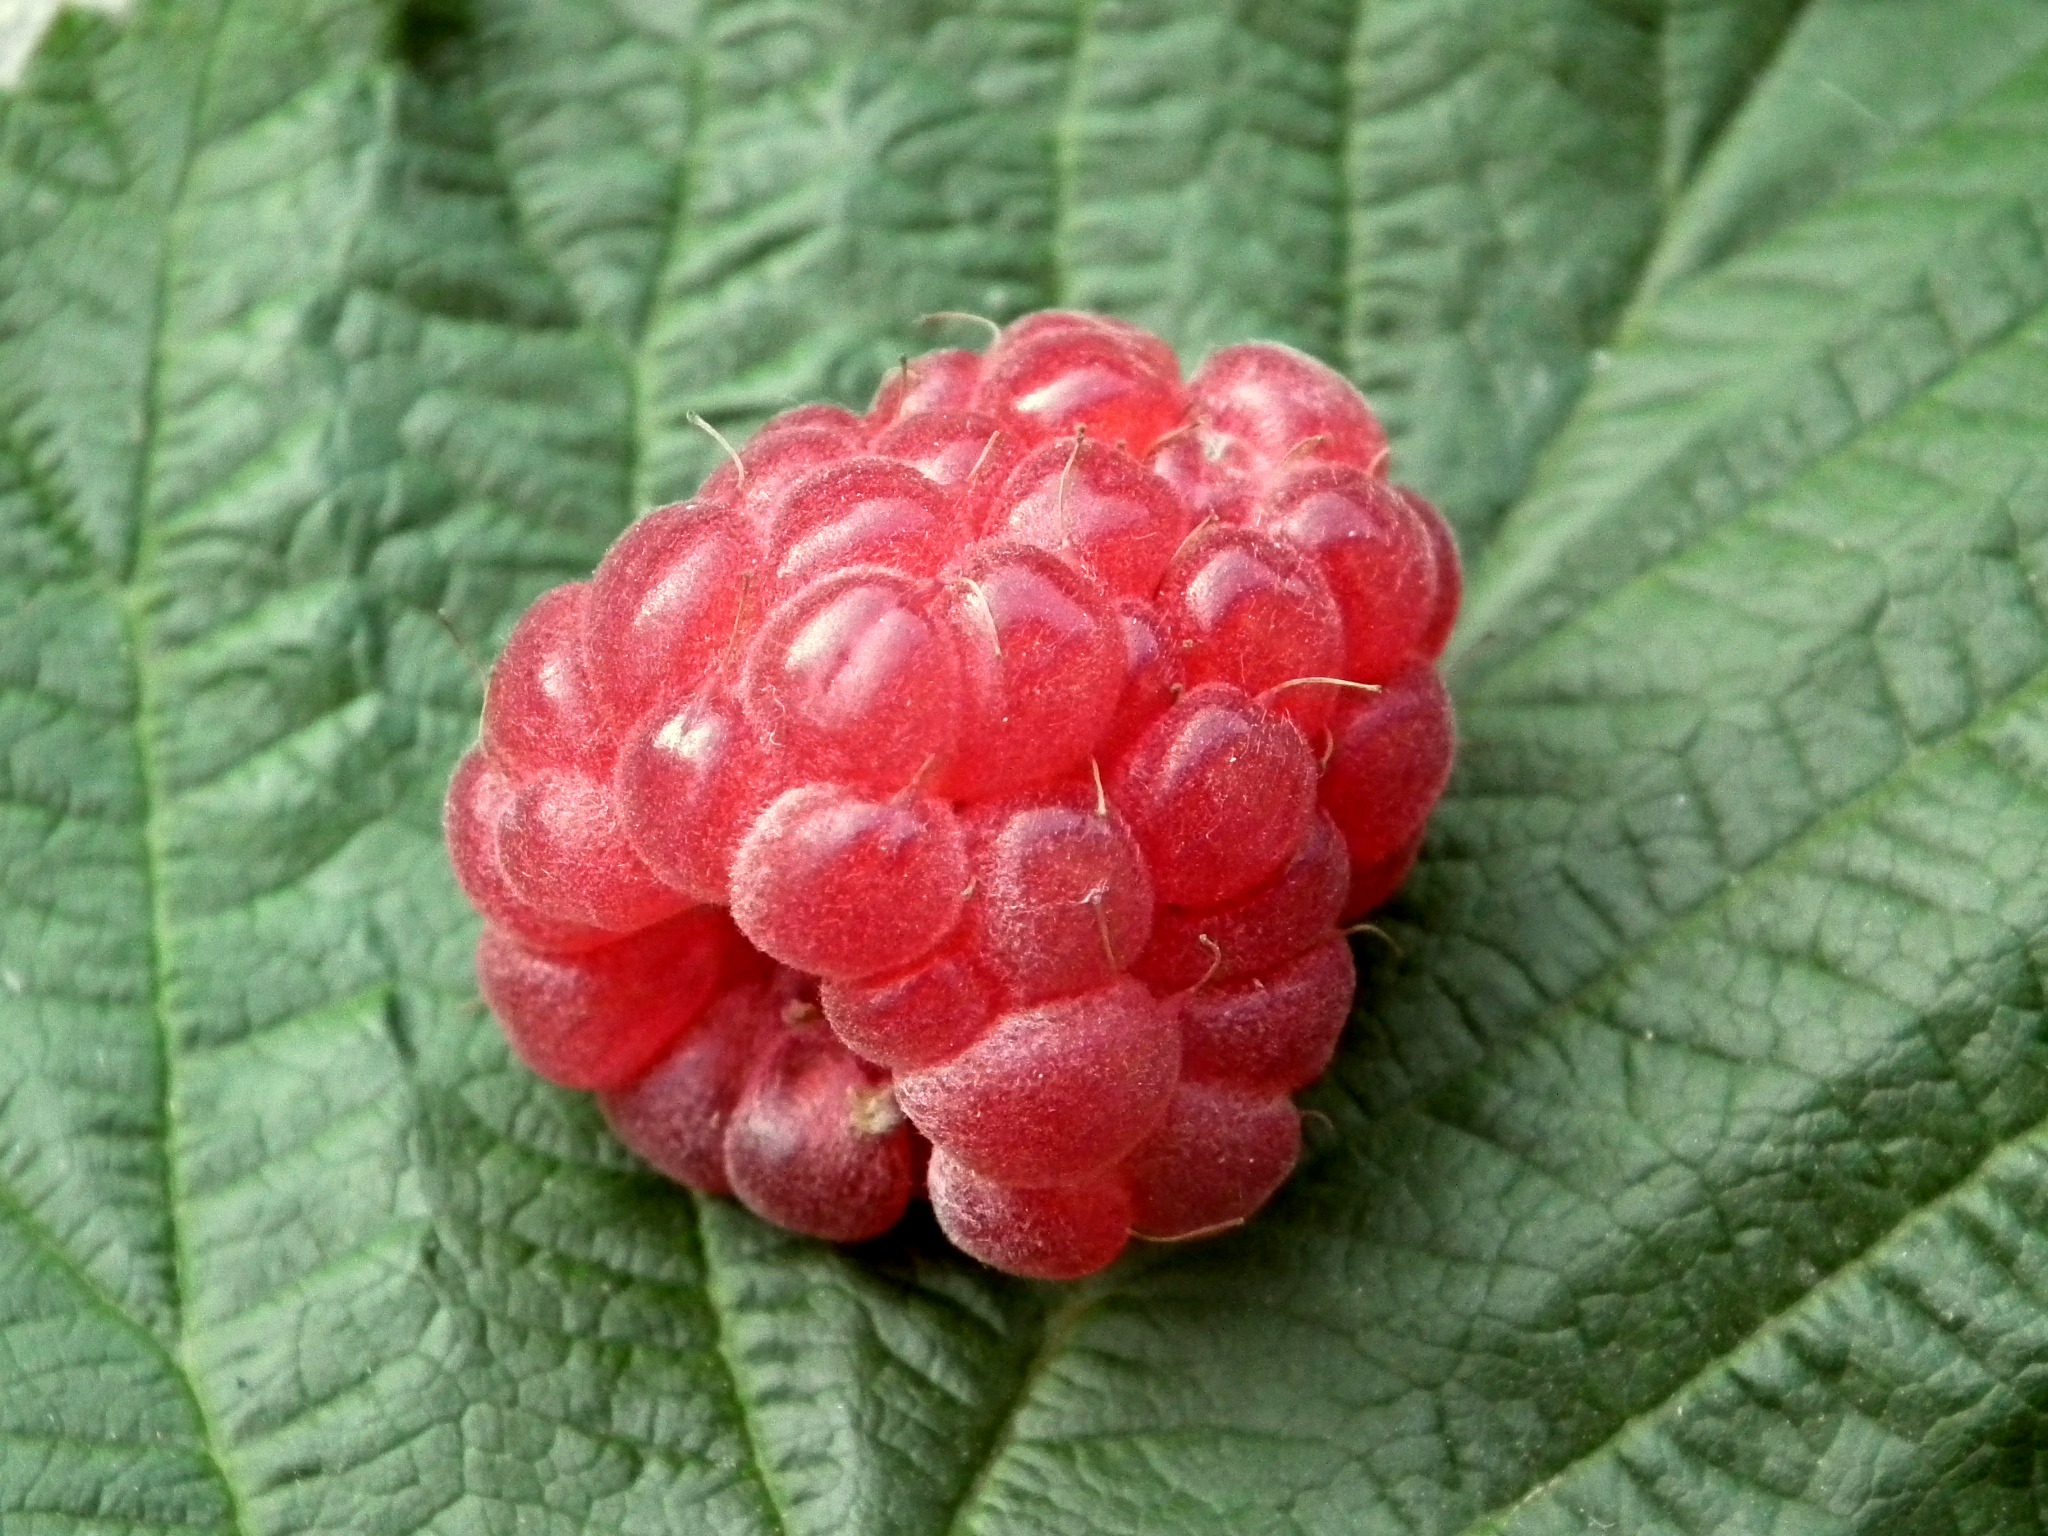 A red raspberry lies on a green leaf